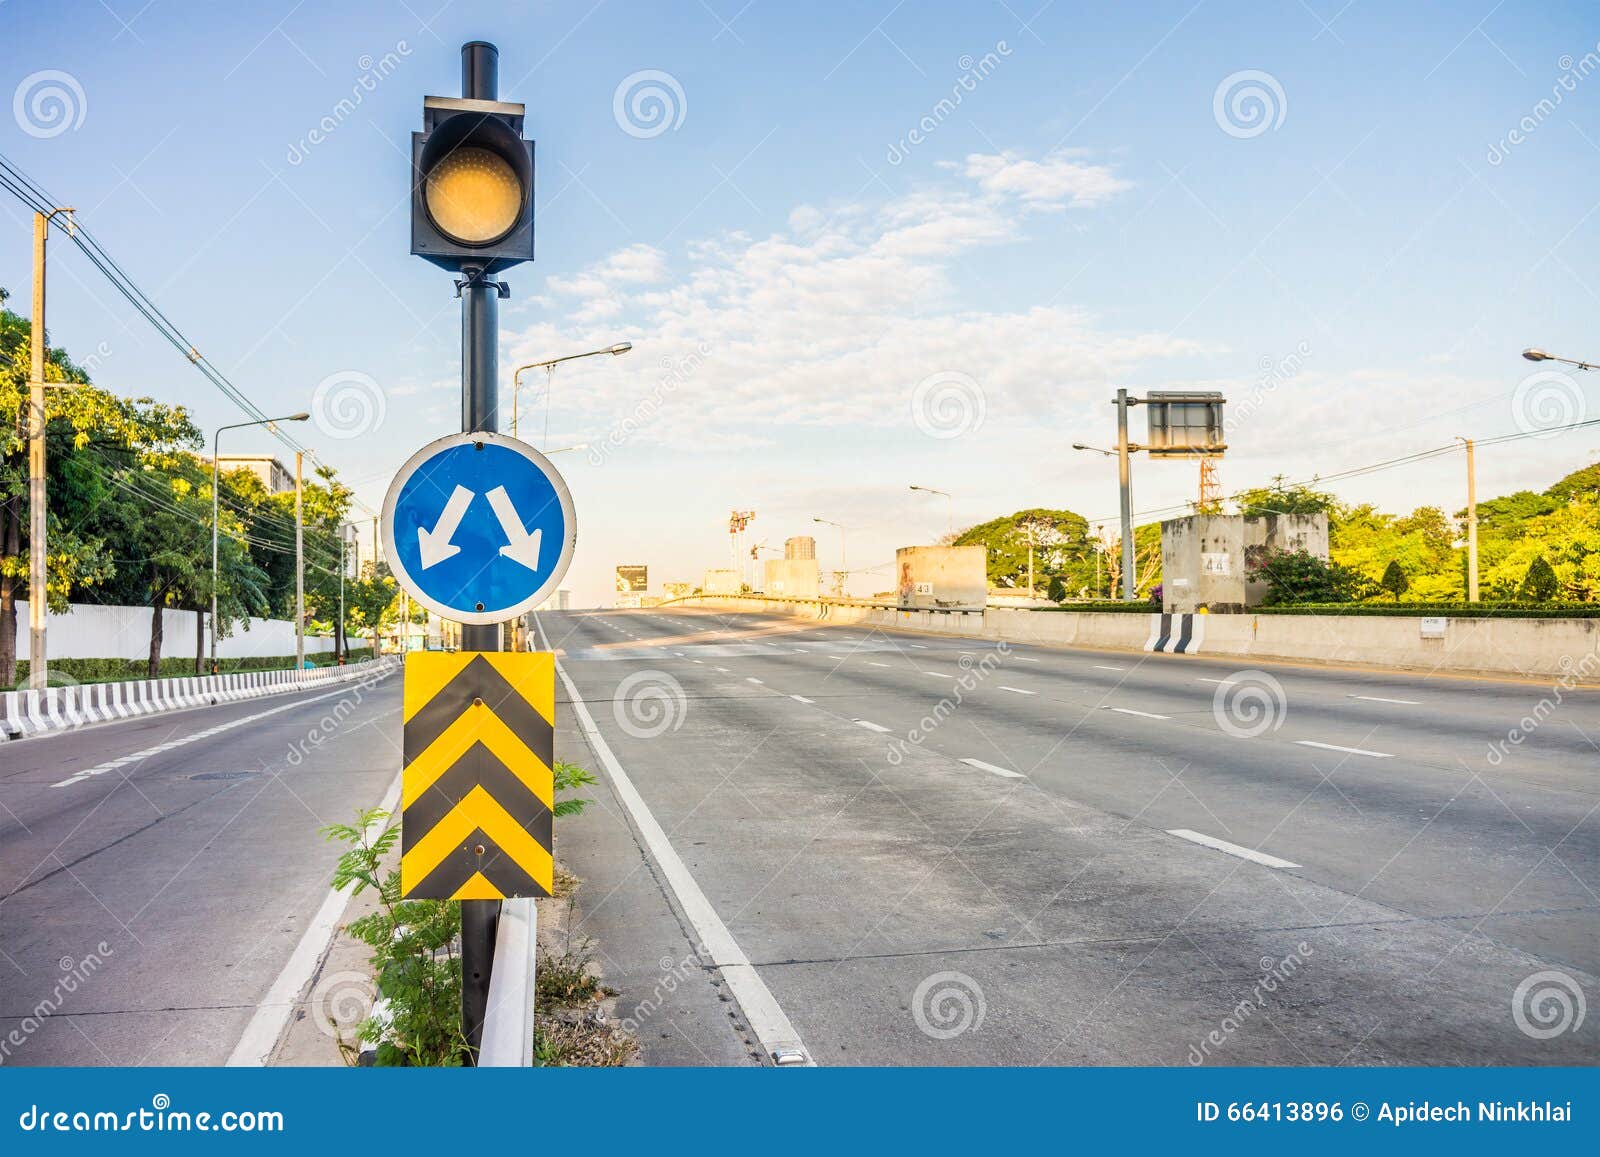 Traffic Signs in Bangkok City, Thailand Stock Photo - Image of lane ...